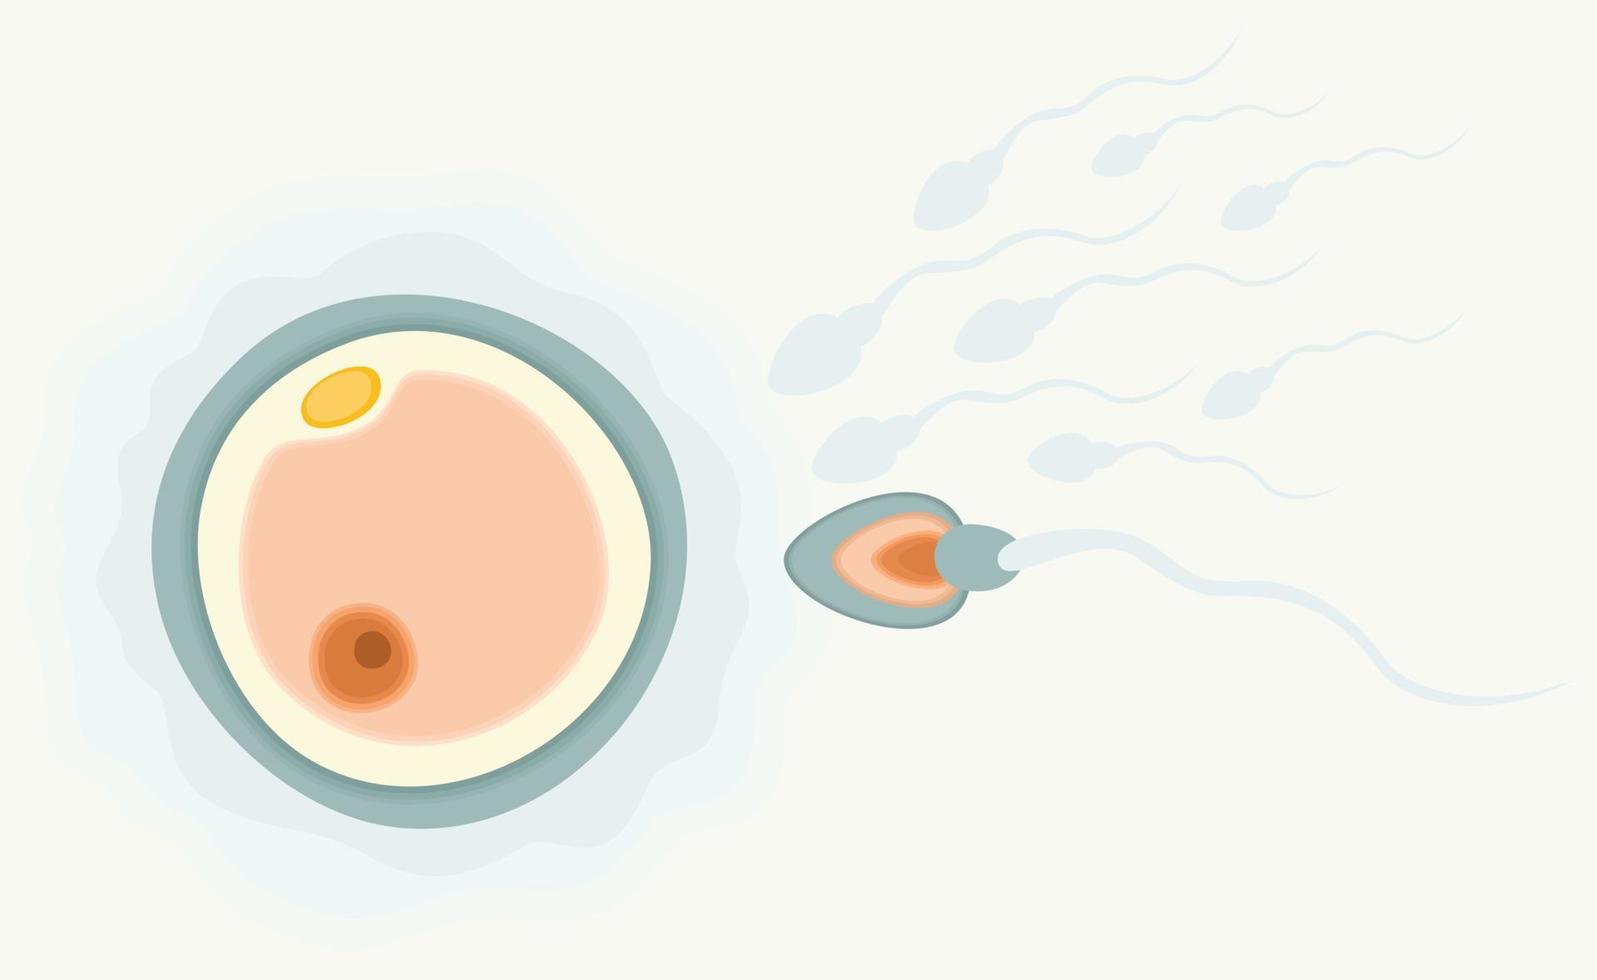 esperma correndo para o ovo. conceito de fertilidade humana. vetor